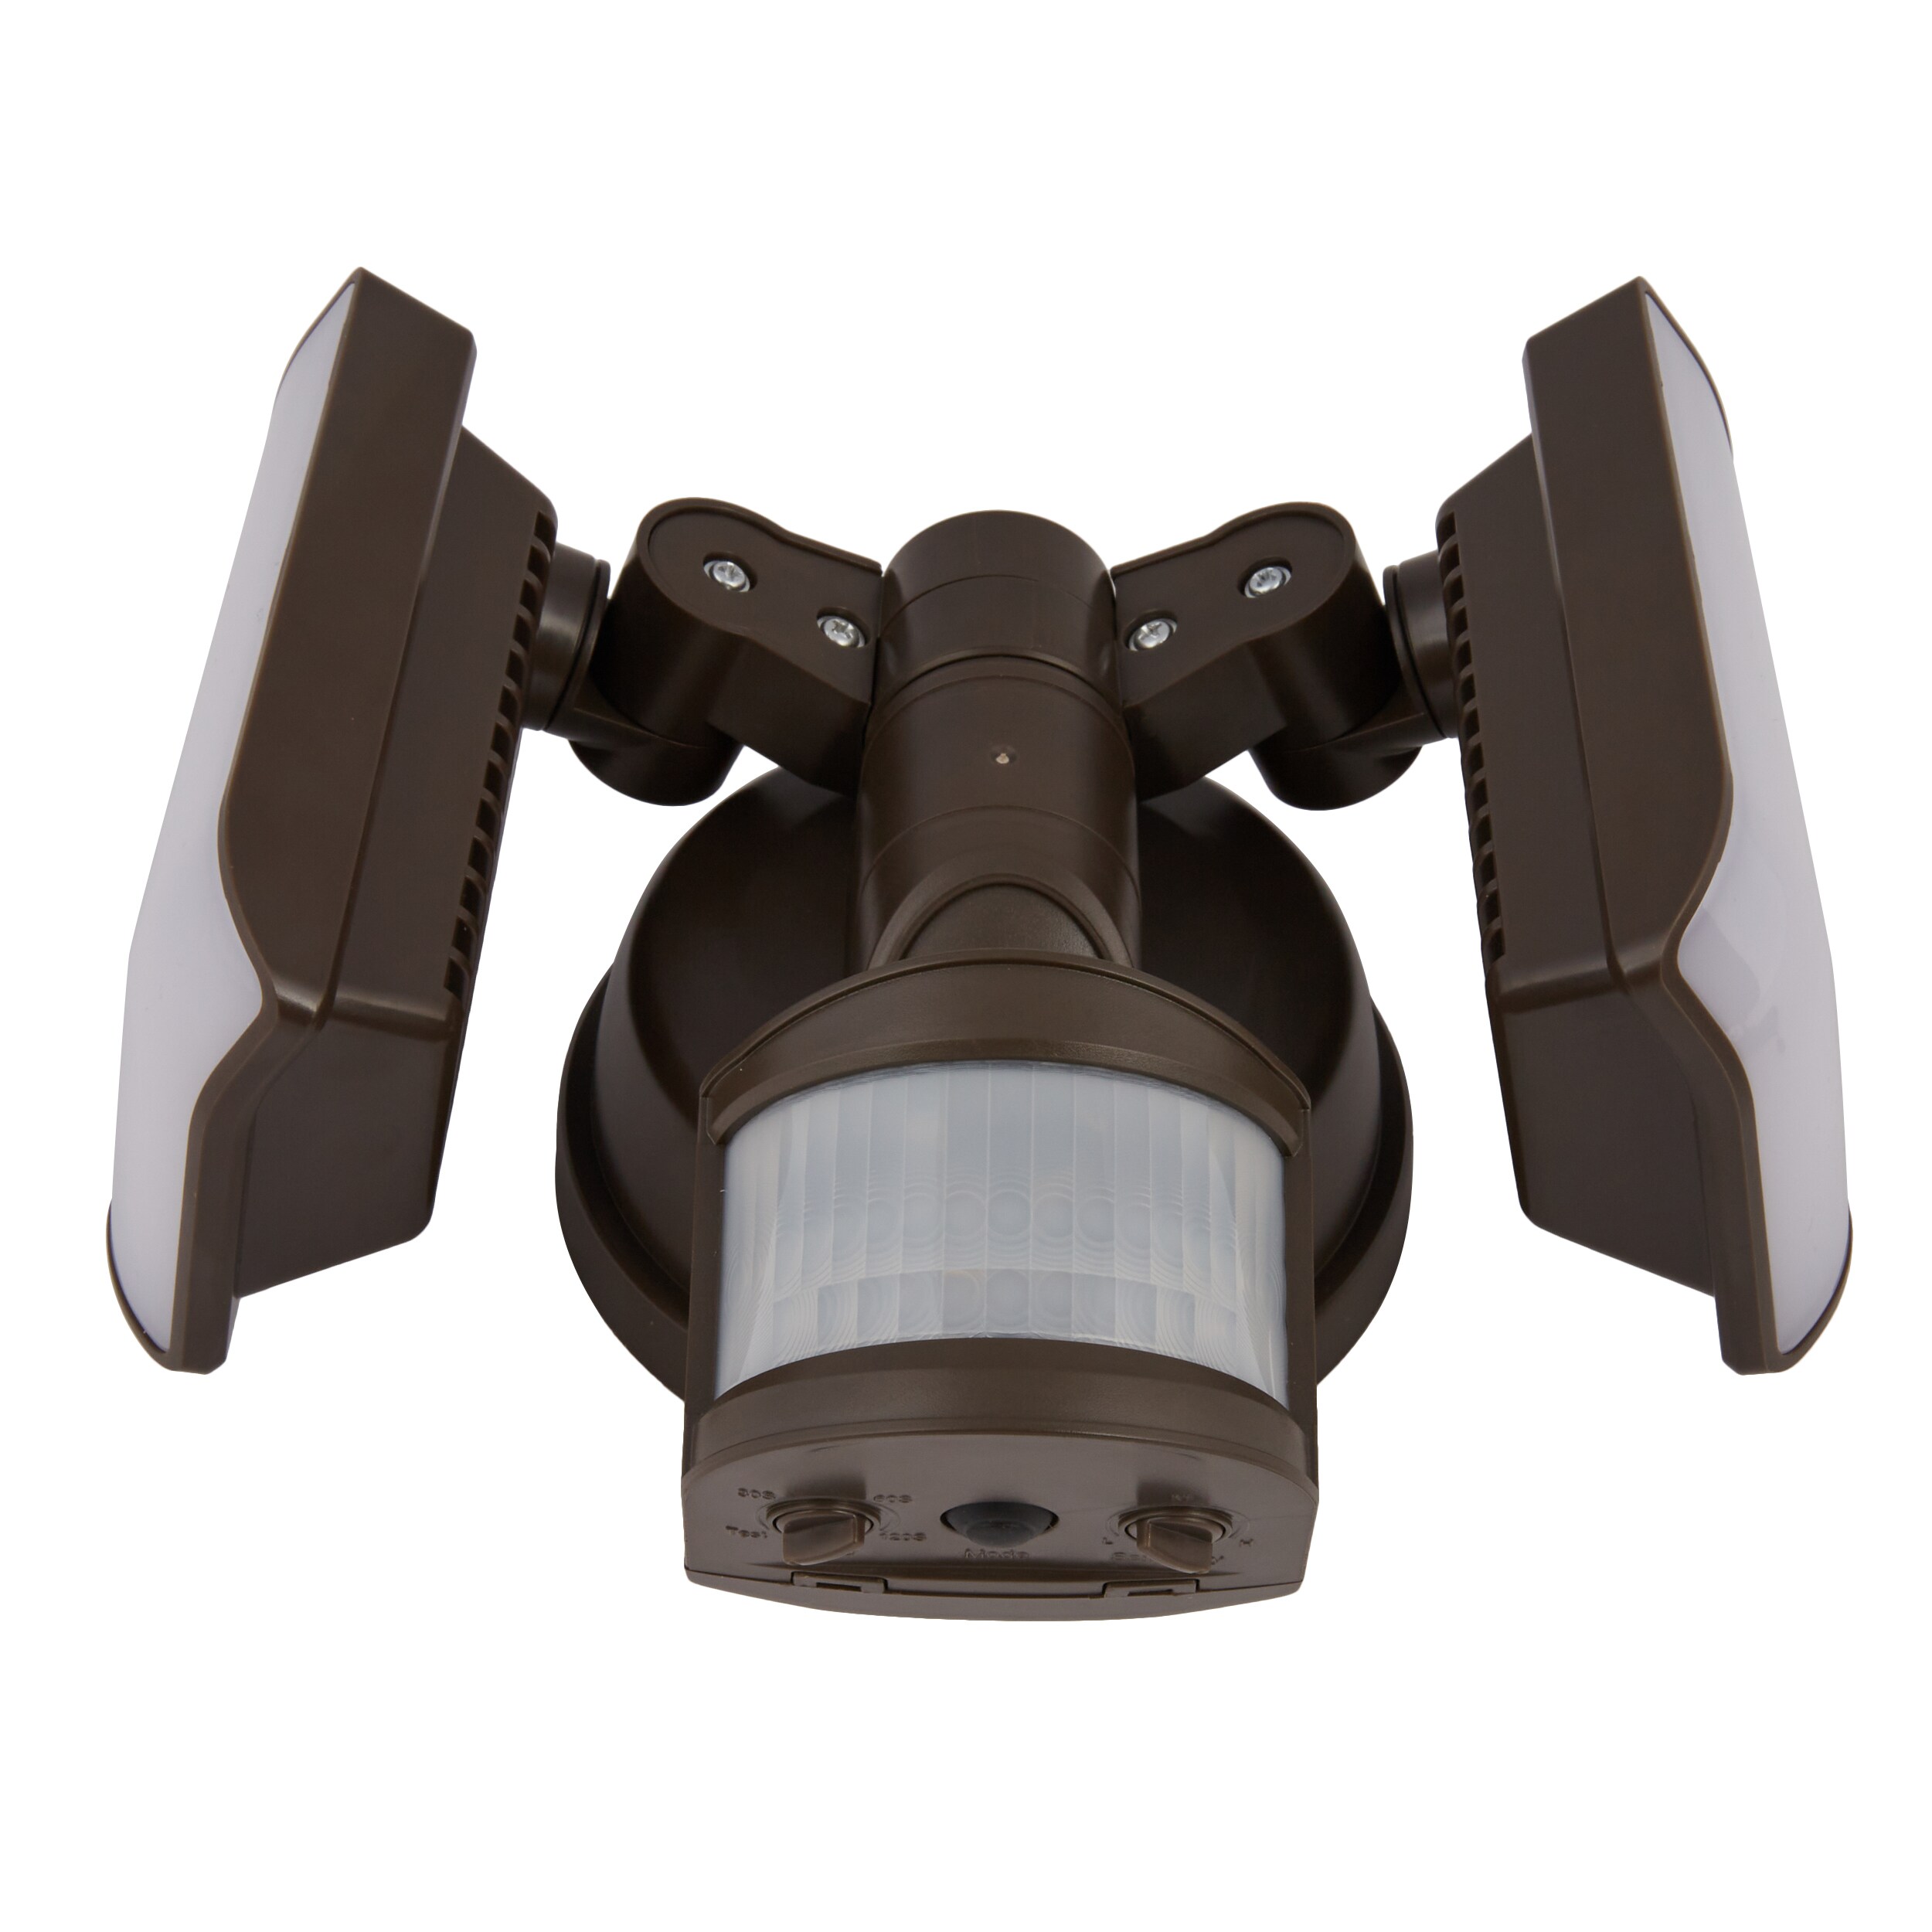 FORCETEKDATA Ultra Bright COB LED 1200 Lumens 180 Degree Triple Head Solar  Powered Motion Sensor Security Light with Advance Technology